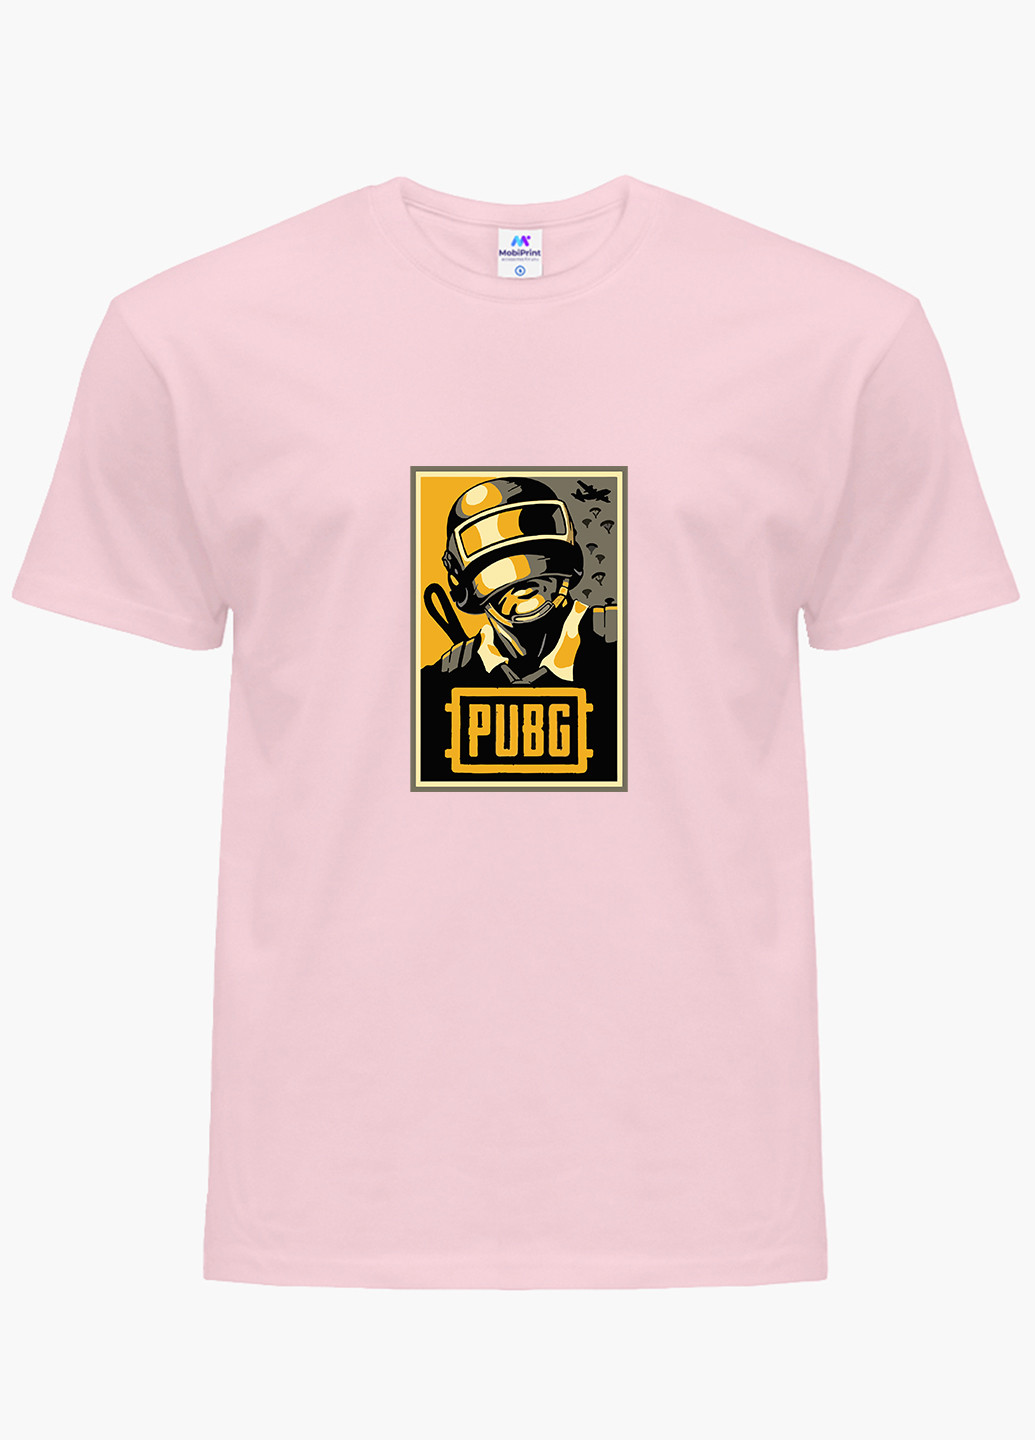 Рожева демісезонна футболка дитяча пубг пабг (pubg) (9224-1179) MobiPrint